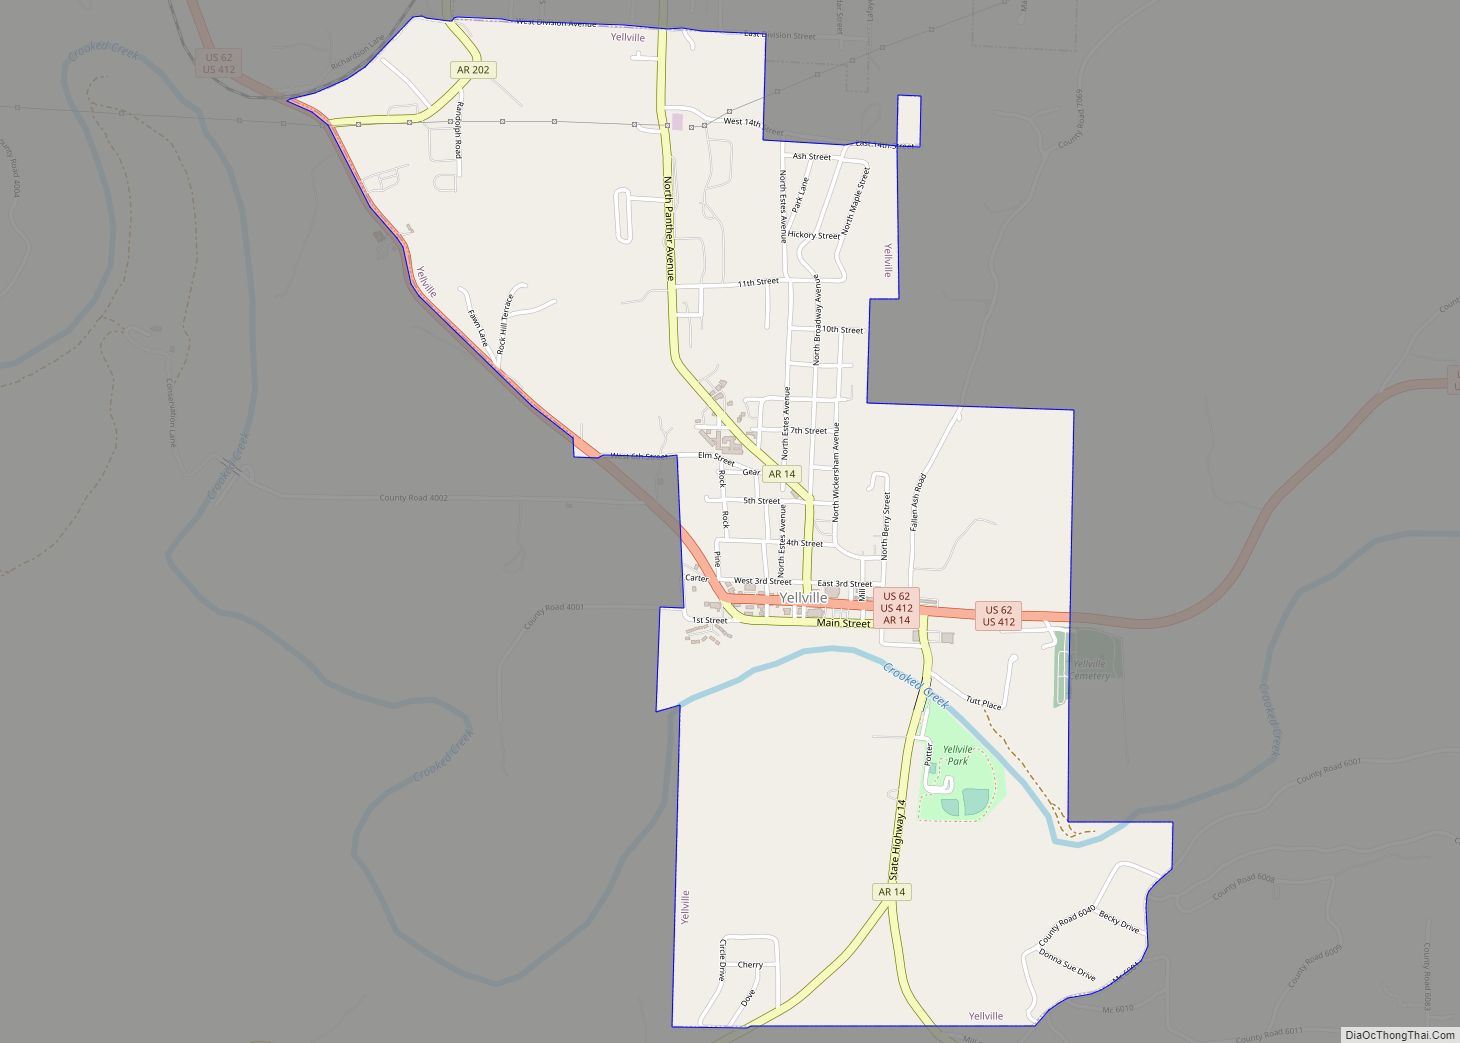 Map of Yellville city